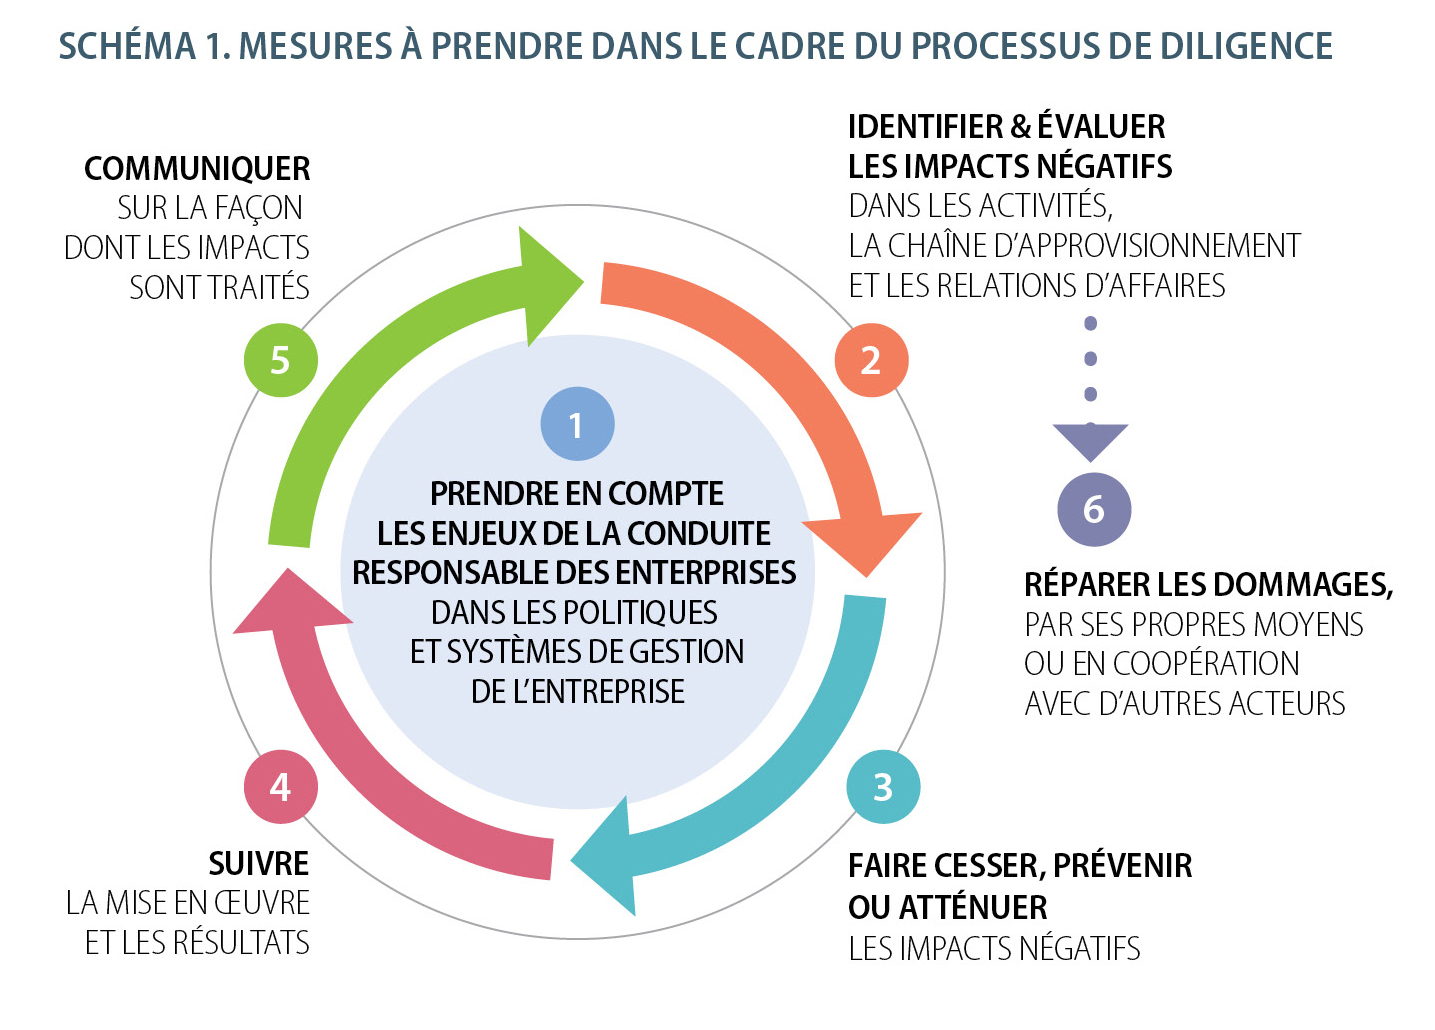 OECD due diligence 6 steps for enterprises